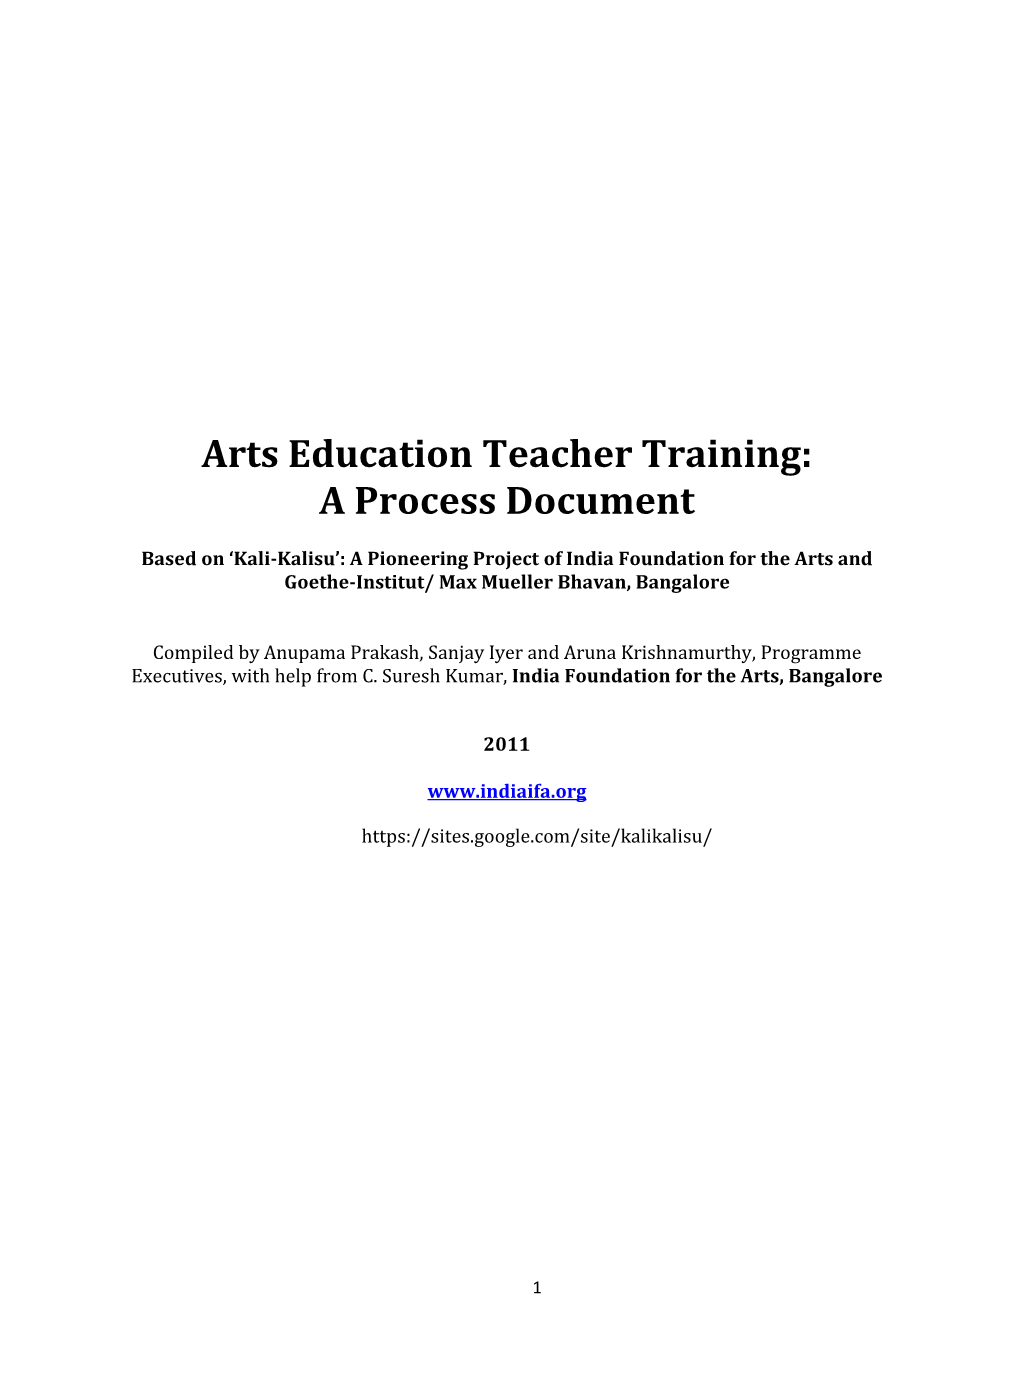 Arts Education Teacher Training: a Process Document